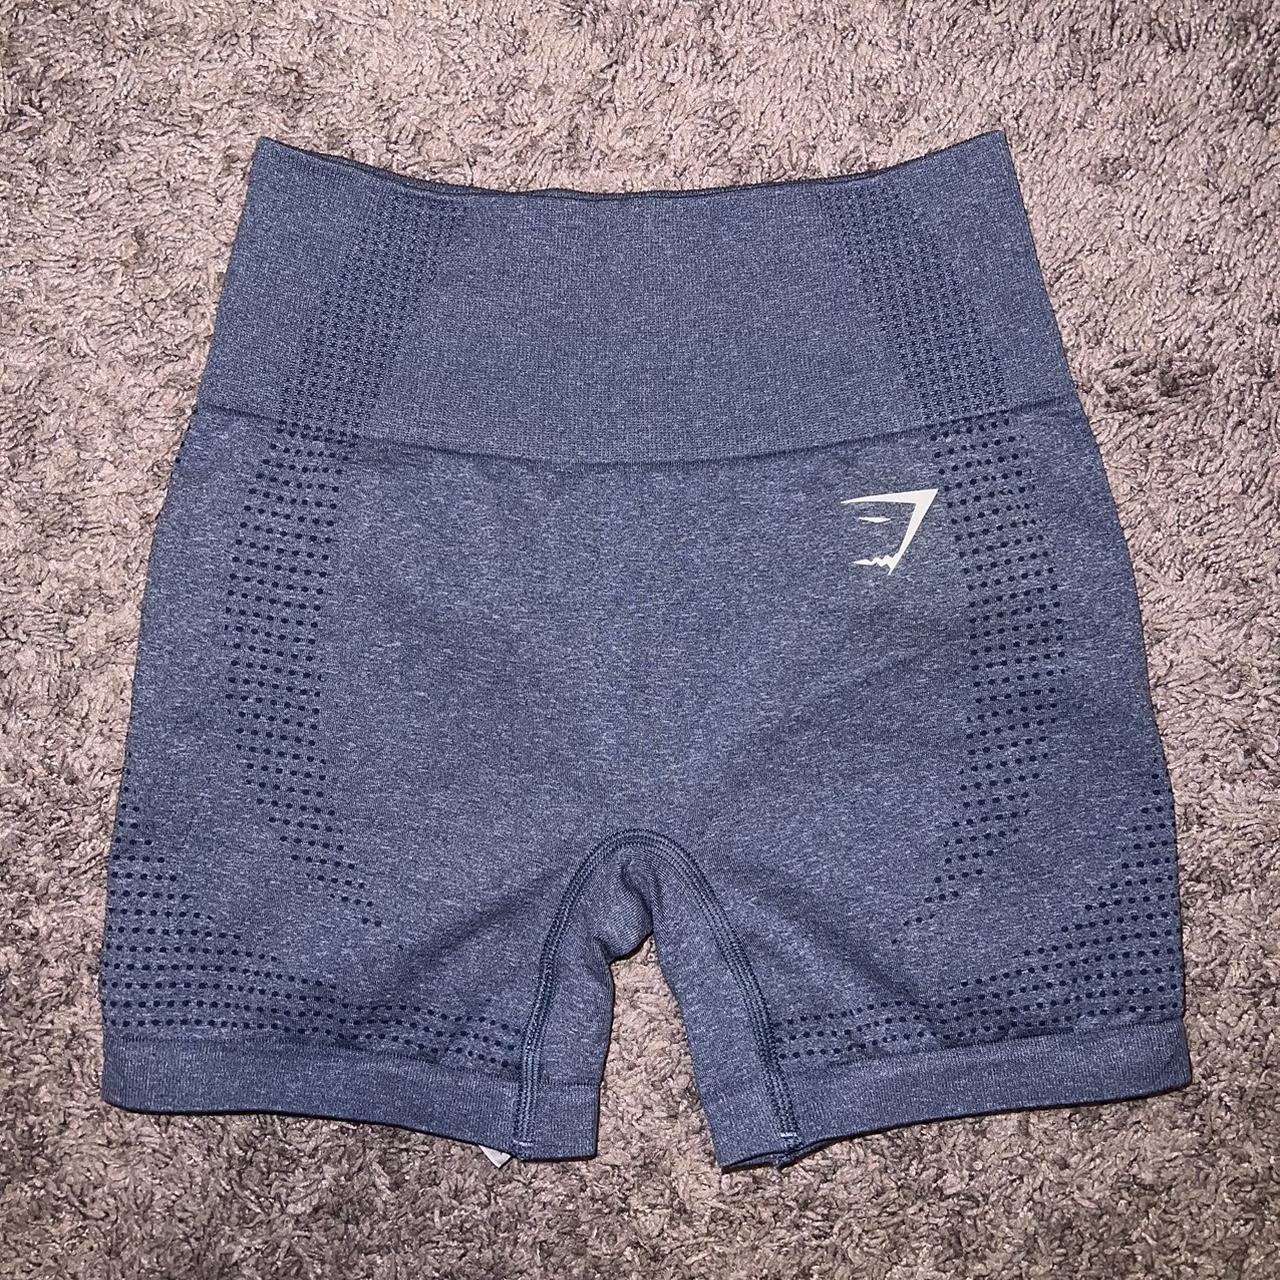 Gymshark vital seamless 2.0 shorts Size: XS Color: - Depop